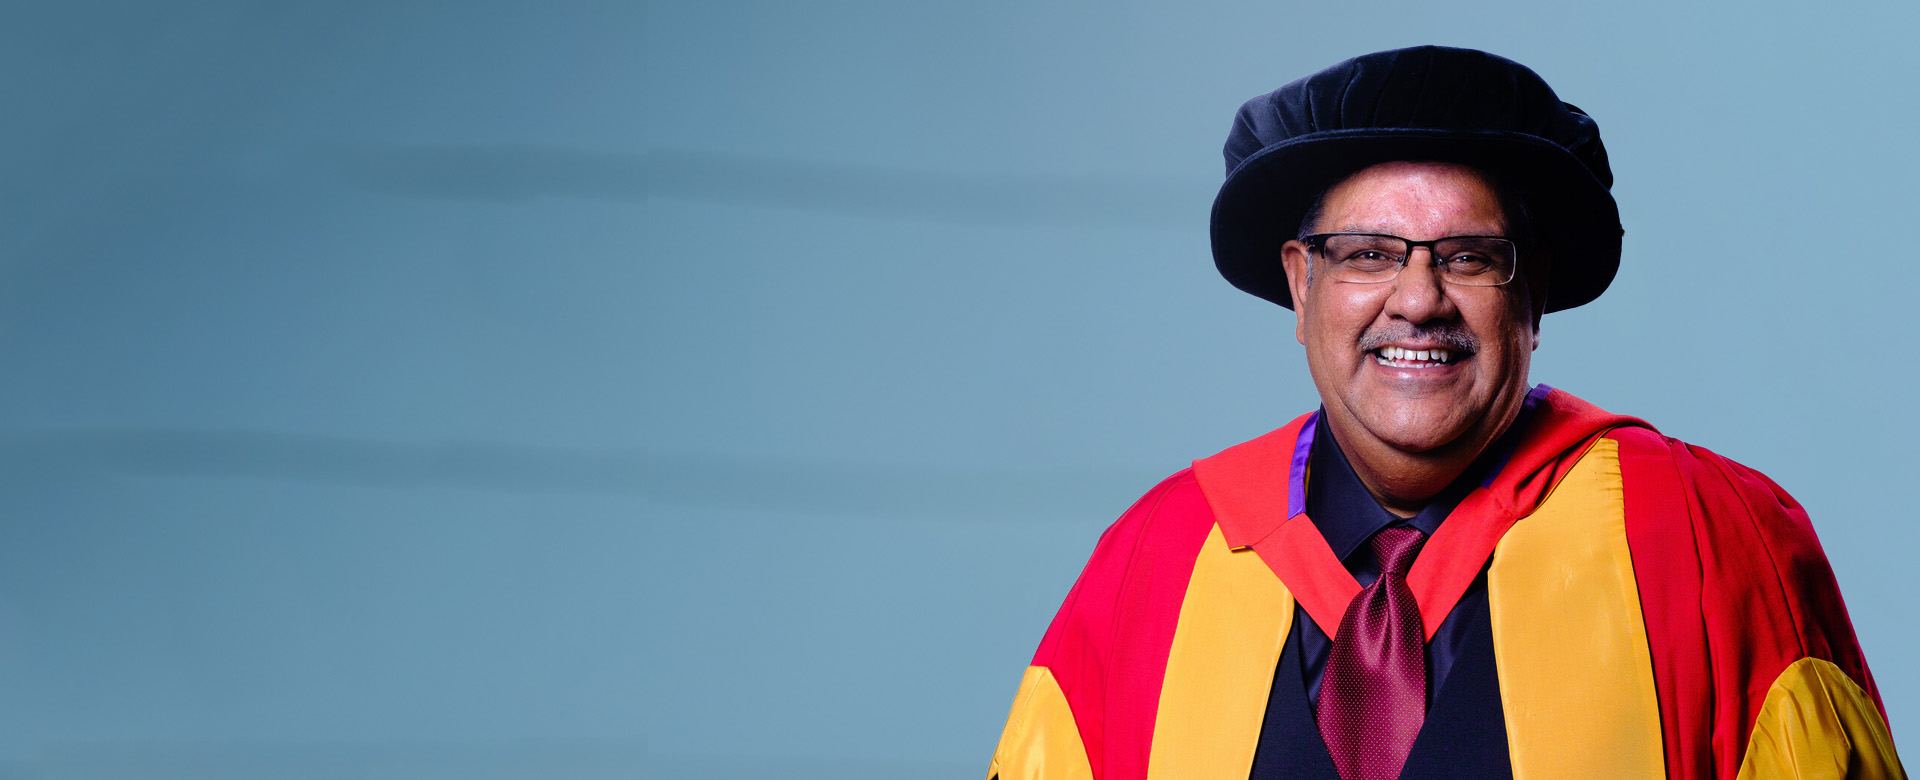 Dr Venkata Satyanarayana Murthy Renduchintala in his honorary graduate robes and hat.